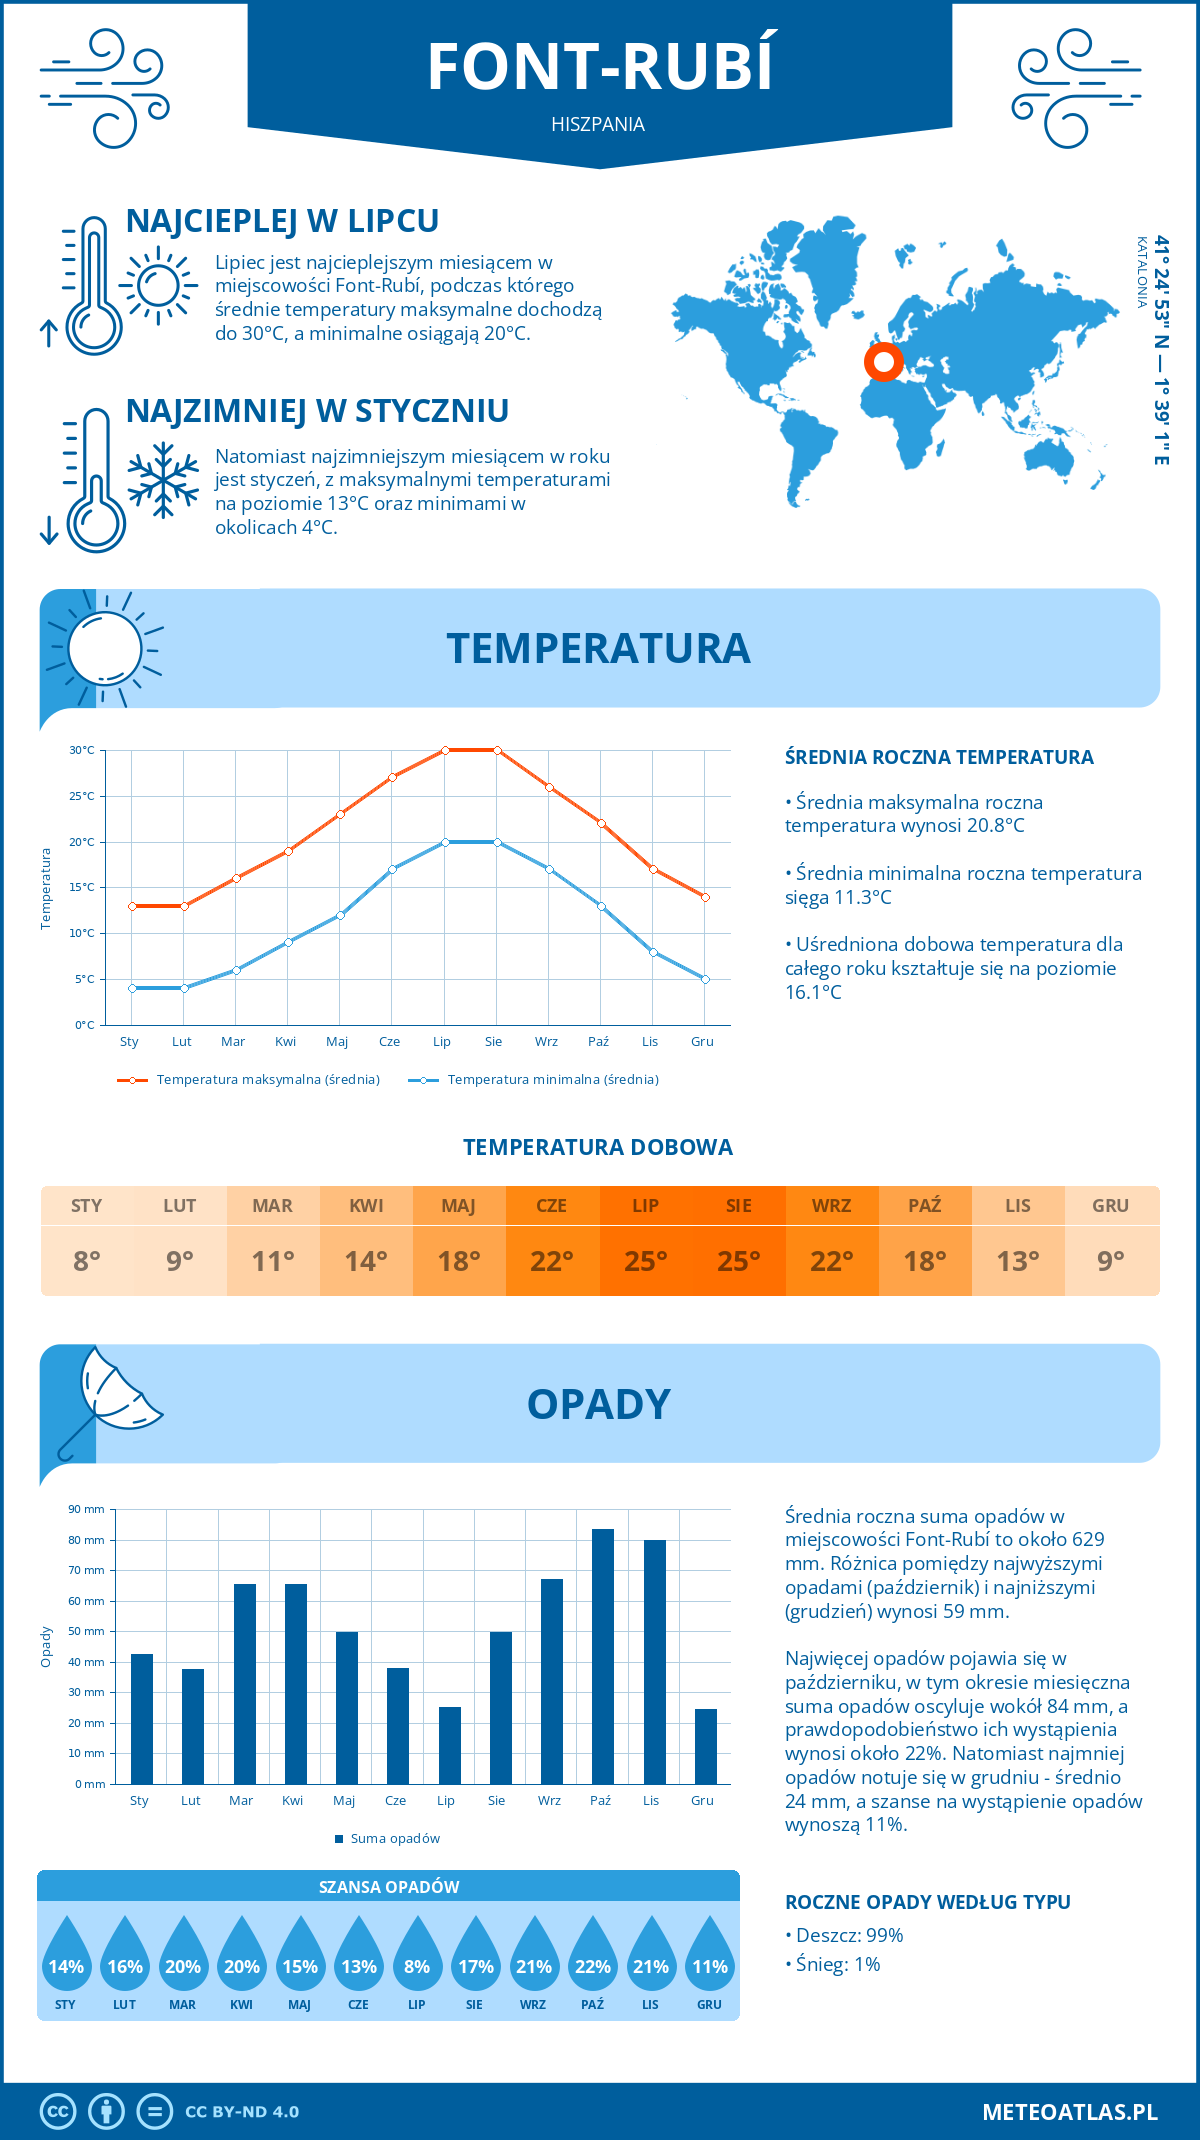 Pogoda Font-Rubí (Hiszpania). Temperatura oraz opady.